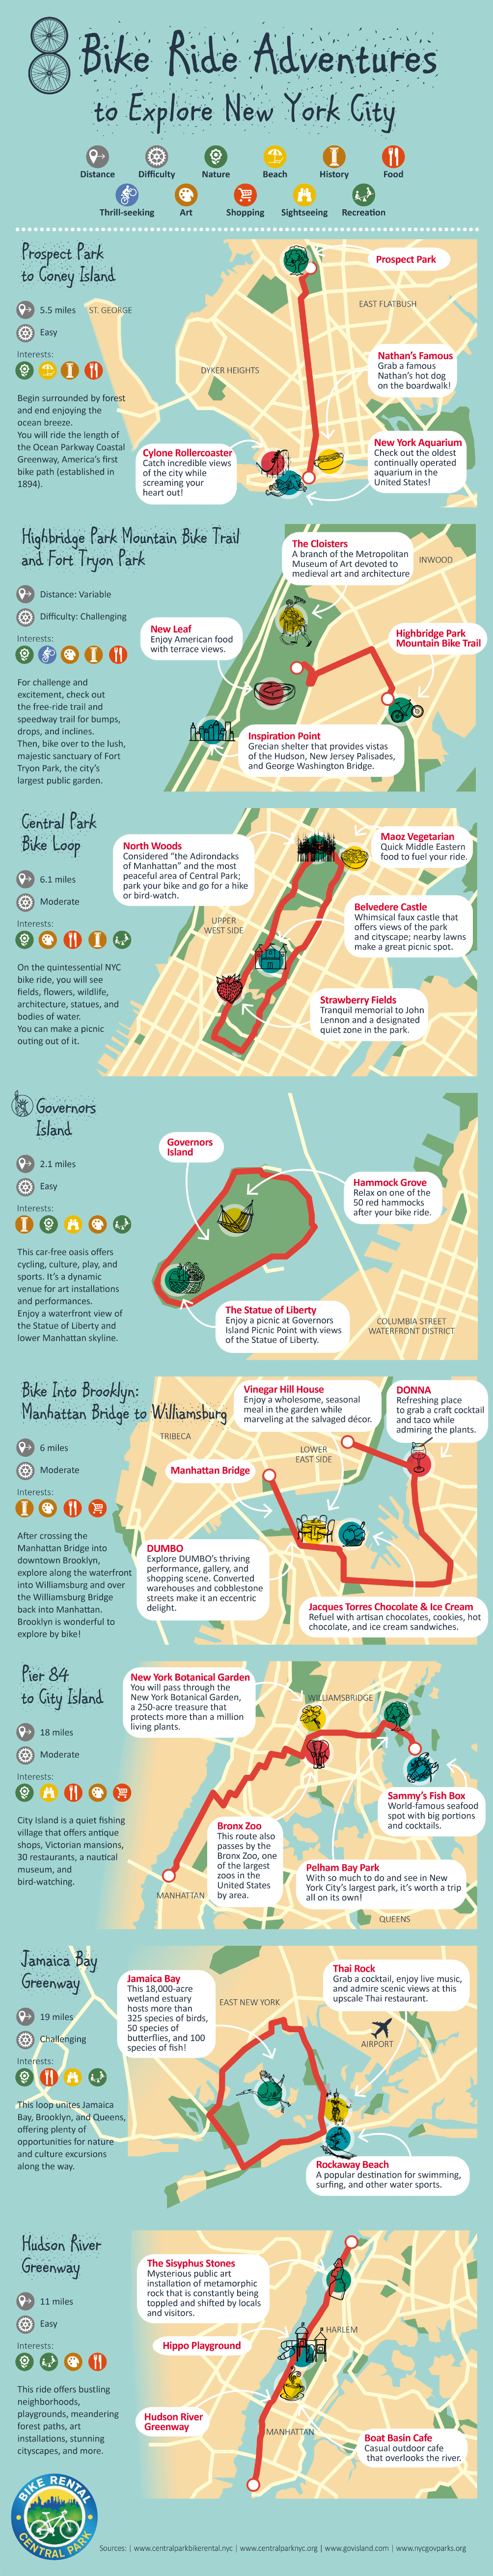 8 Ways to Explore NYC Via Bike Trails